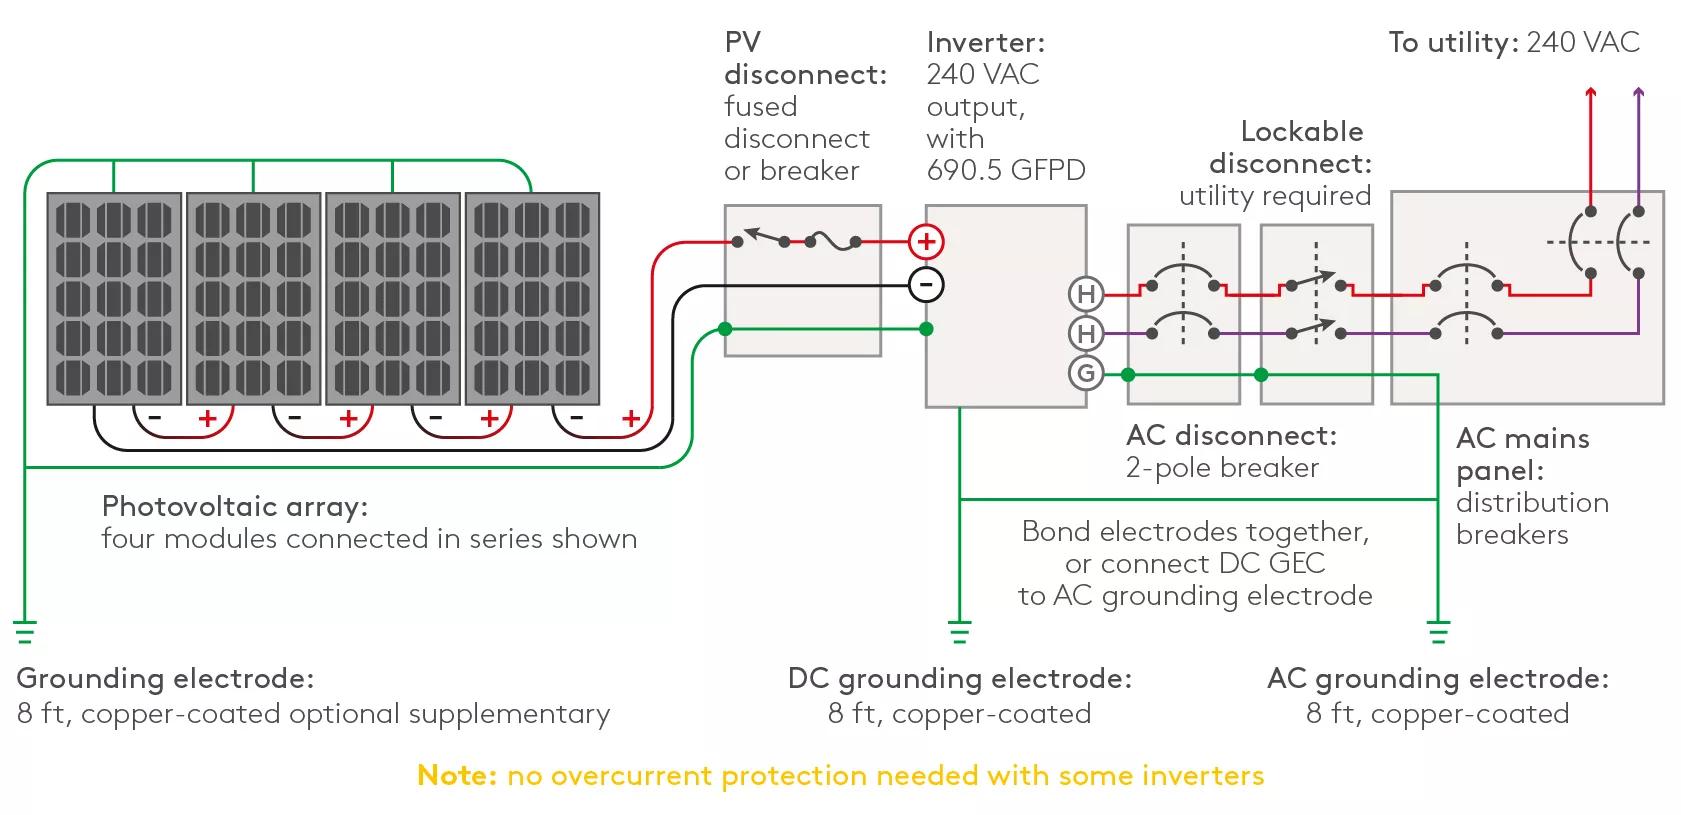 AC Connectors, Solar Power Accessories